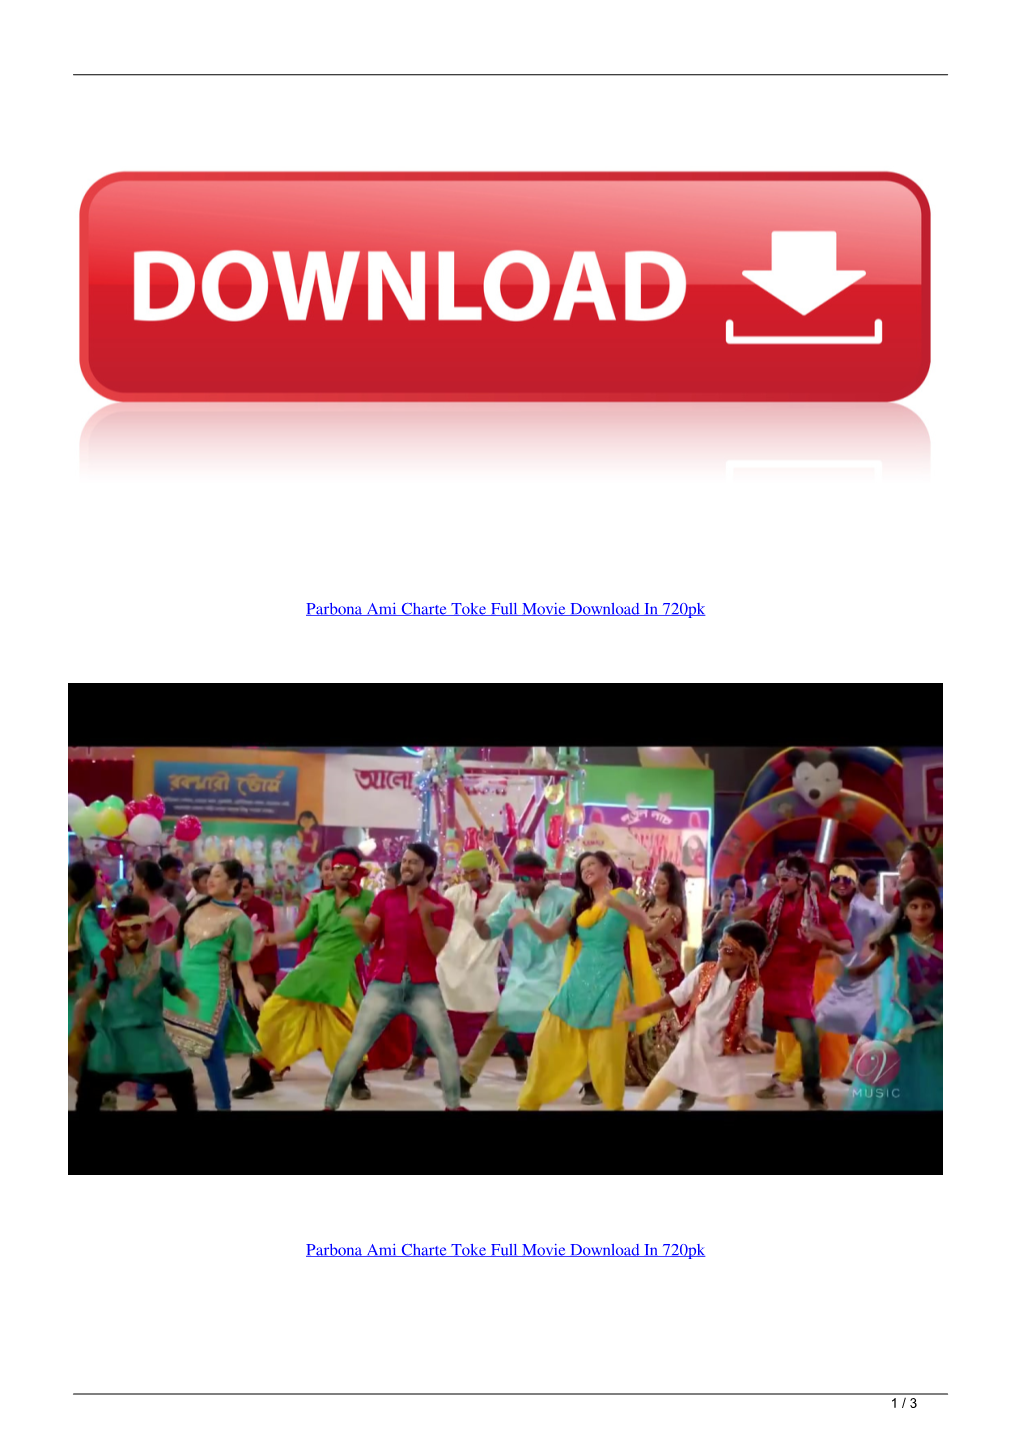 Parbona Ami Charte Toke Full Movie Download in 720Pk